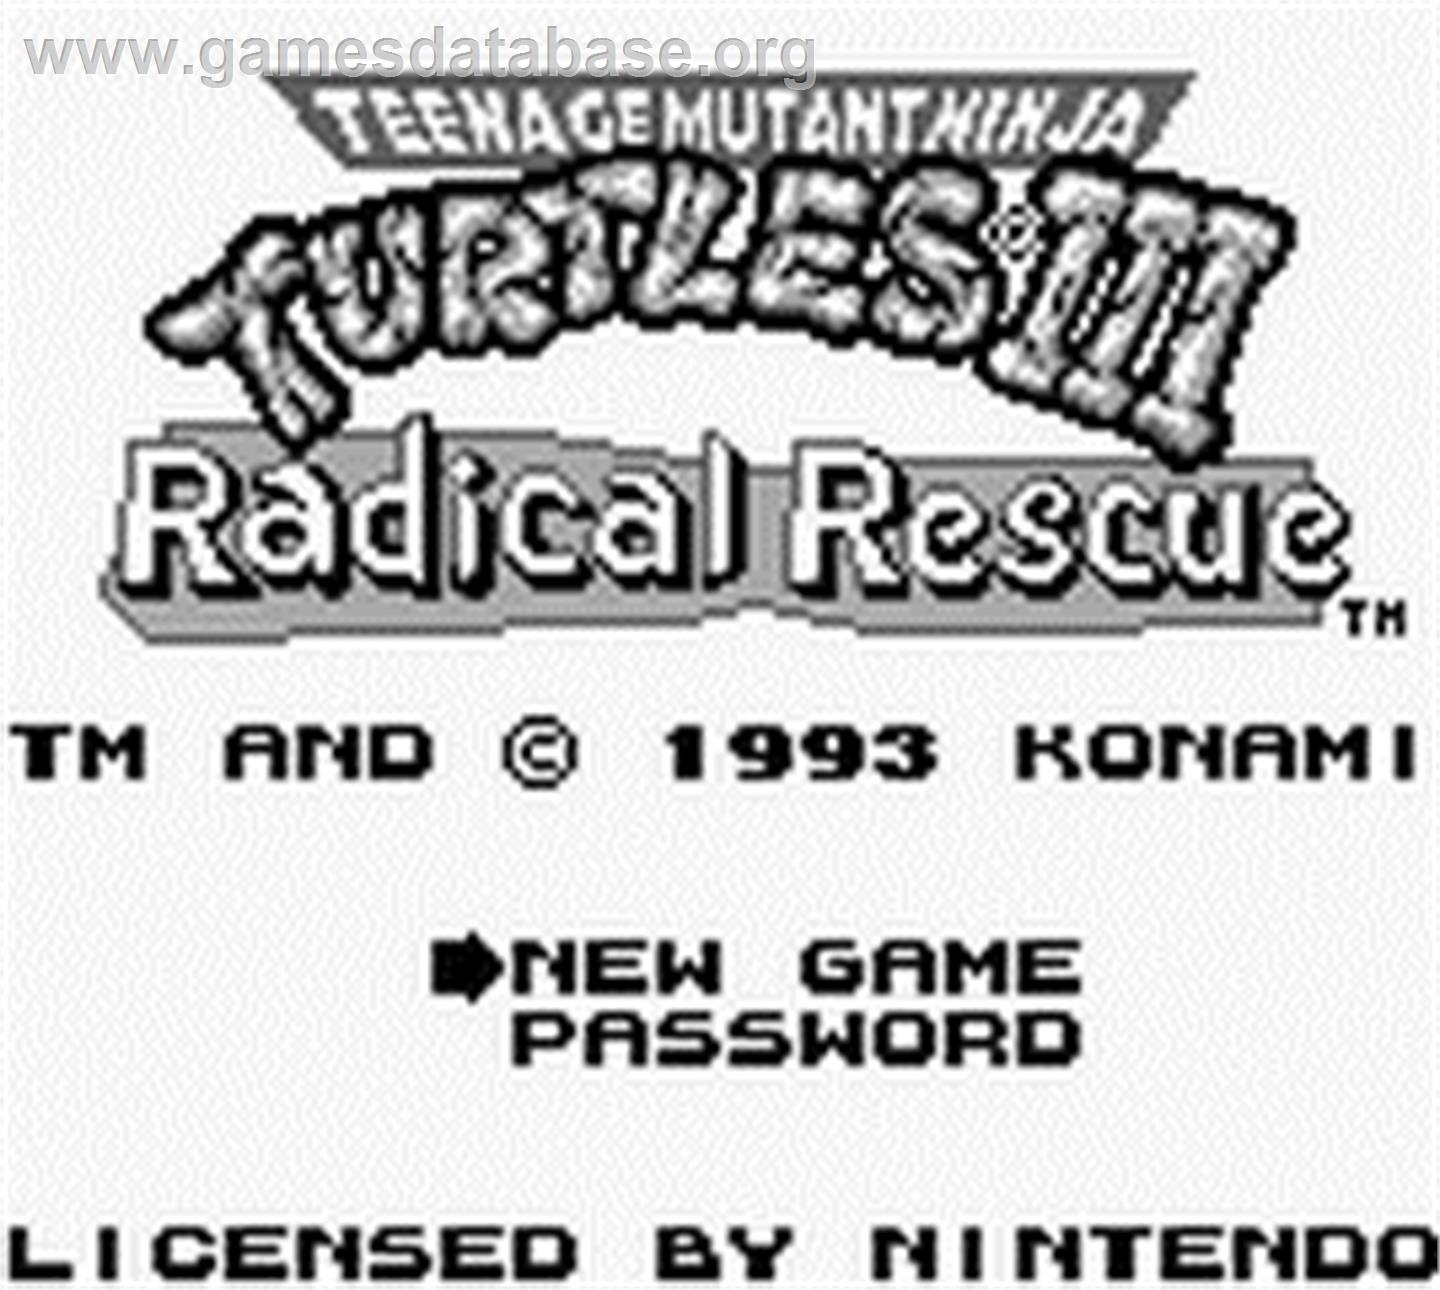 Teenage Mutant Ninja Turtles 3: Radical Rescue - Nintendo Game Boy - Artwork - Title Screen